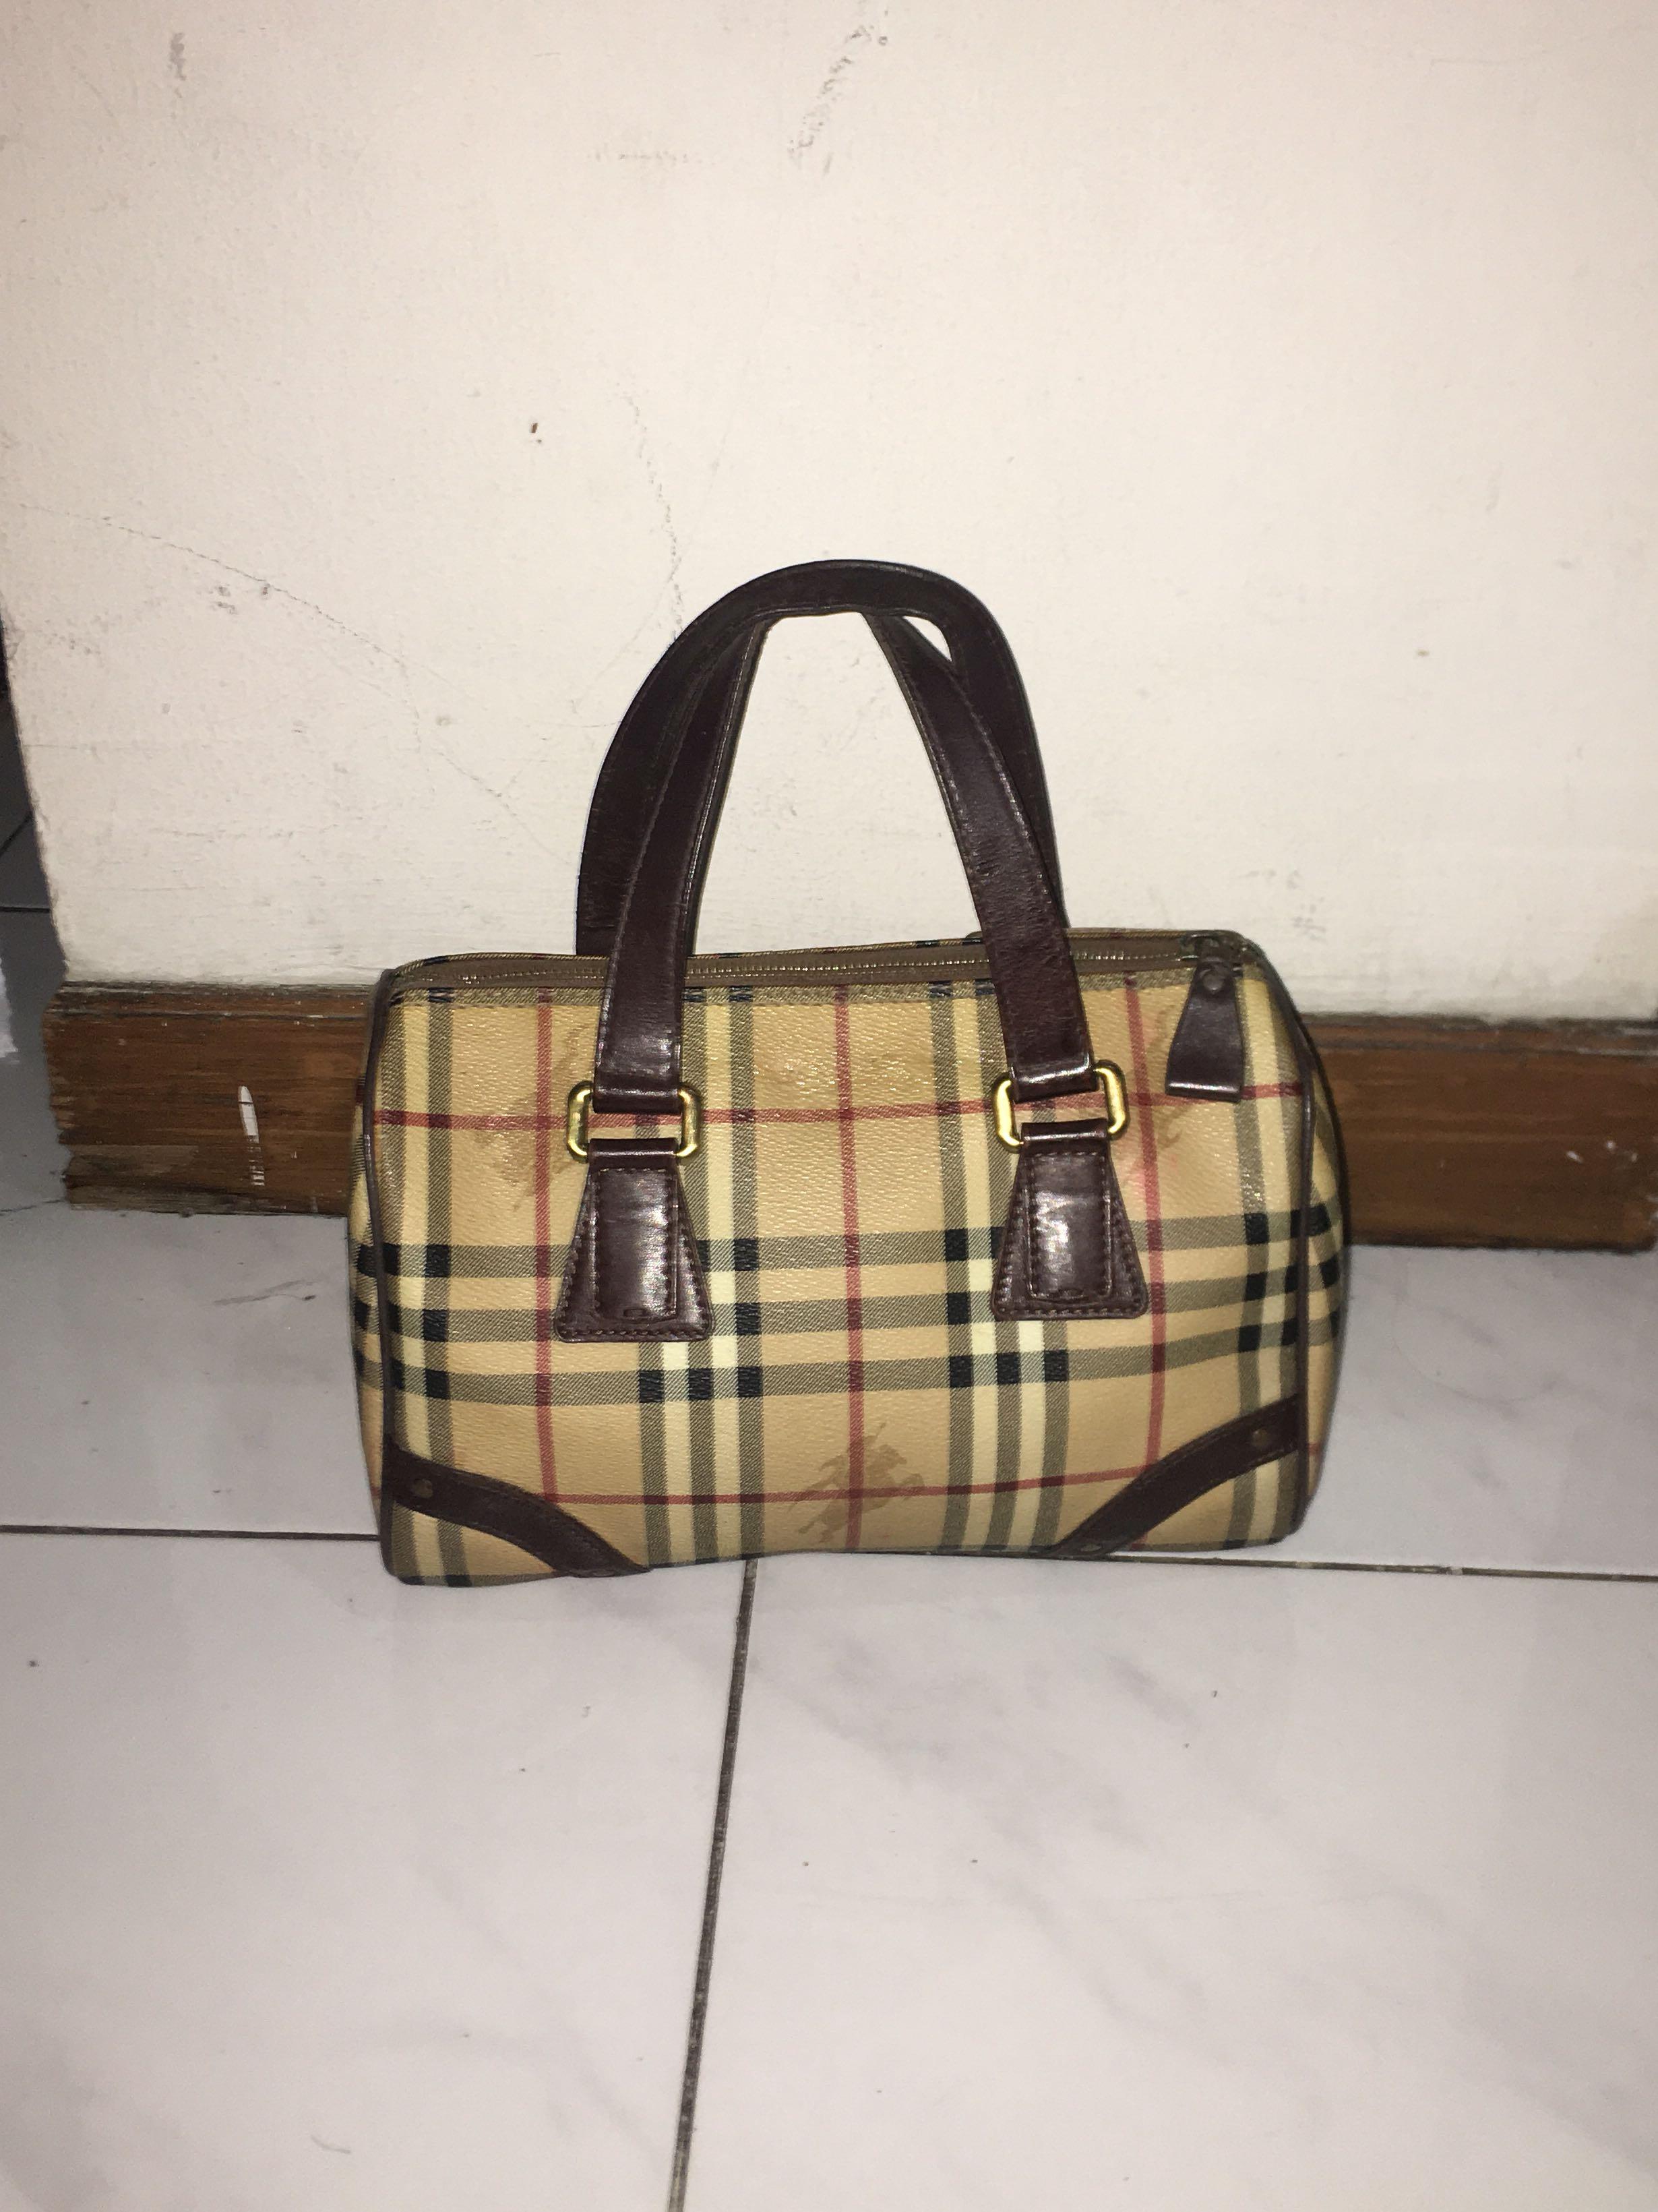 burberry handbags on sale authentic